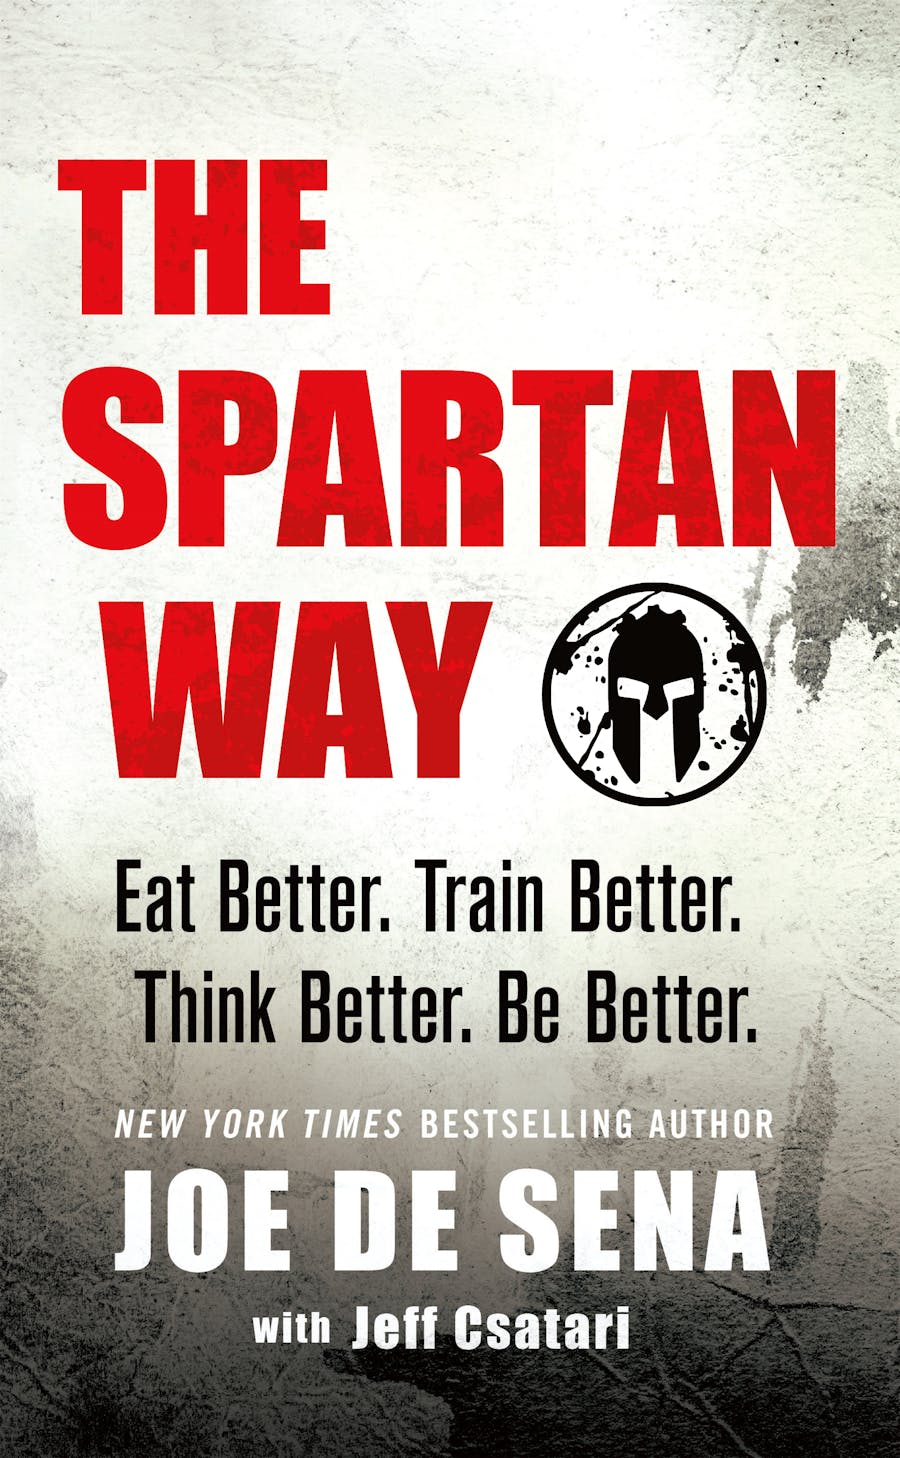 The Spartan Way by Joe De Sena with Jeff Csatari